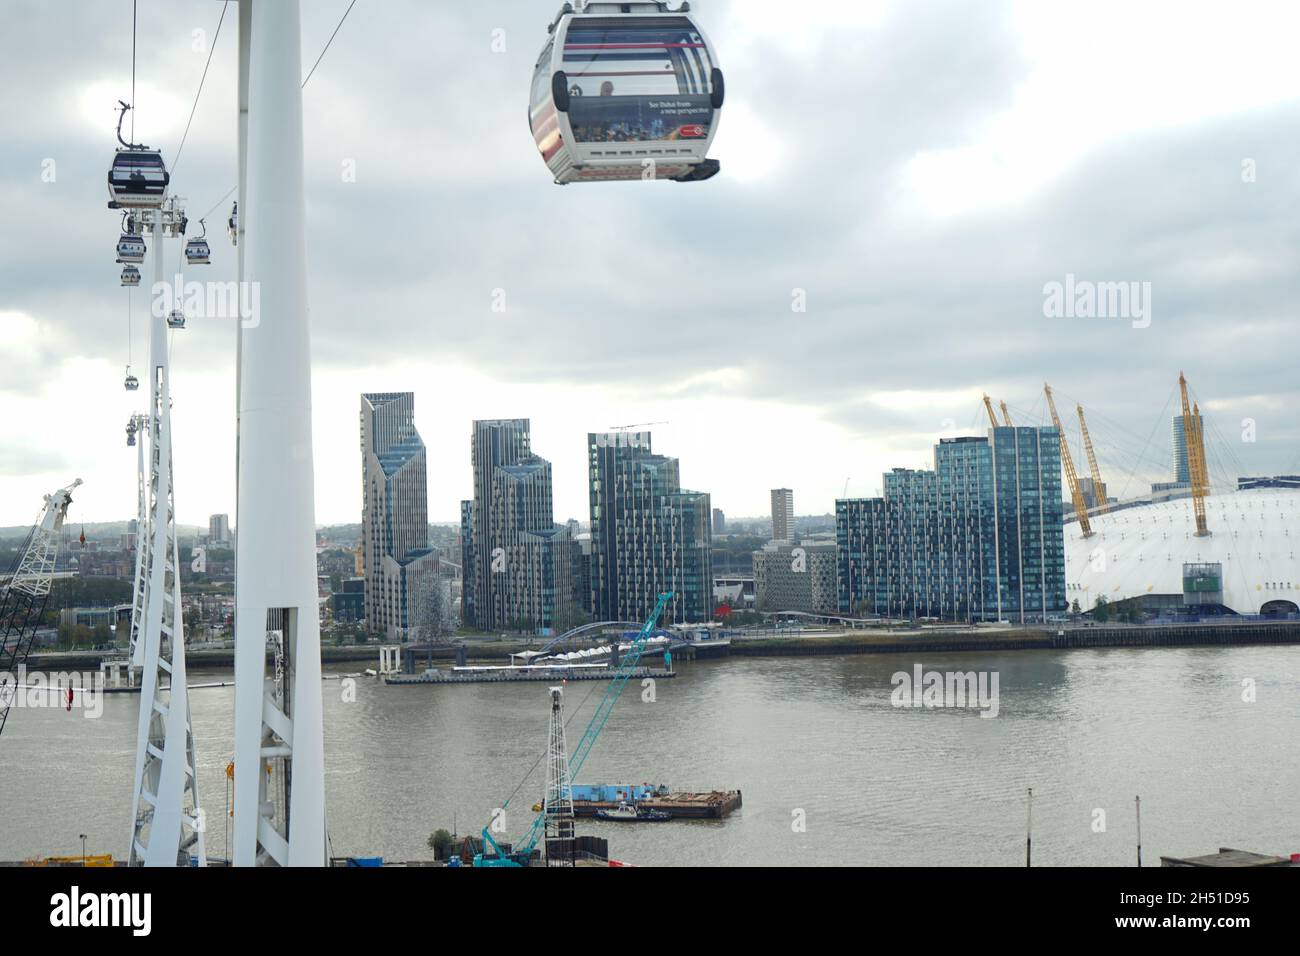 Emirates cable cars cremallera sobre Londres río Támesis en el Reino Unido Foto de stock